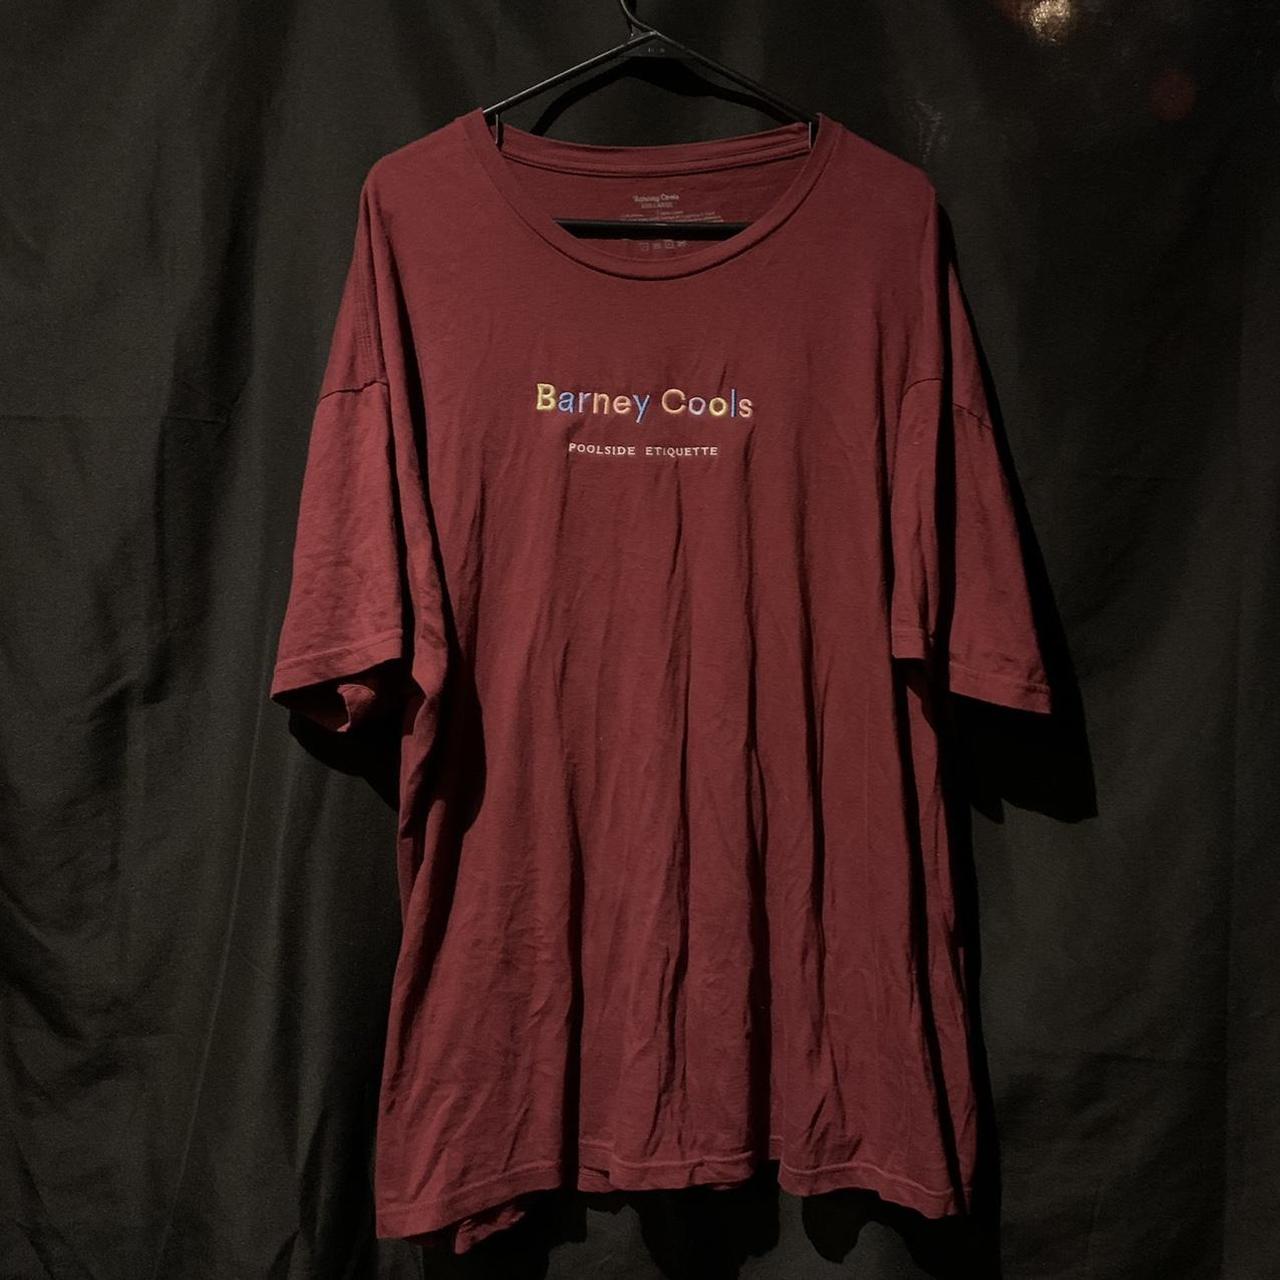 Barney Cools Men's Red T-shirt